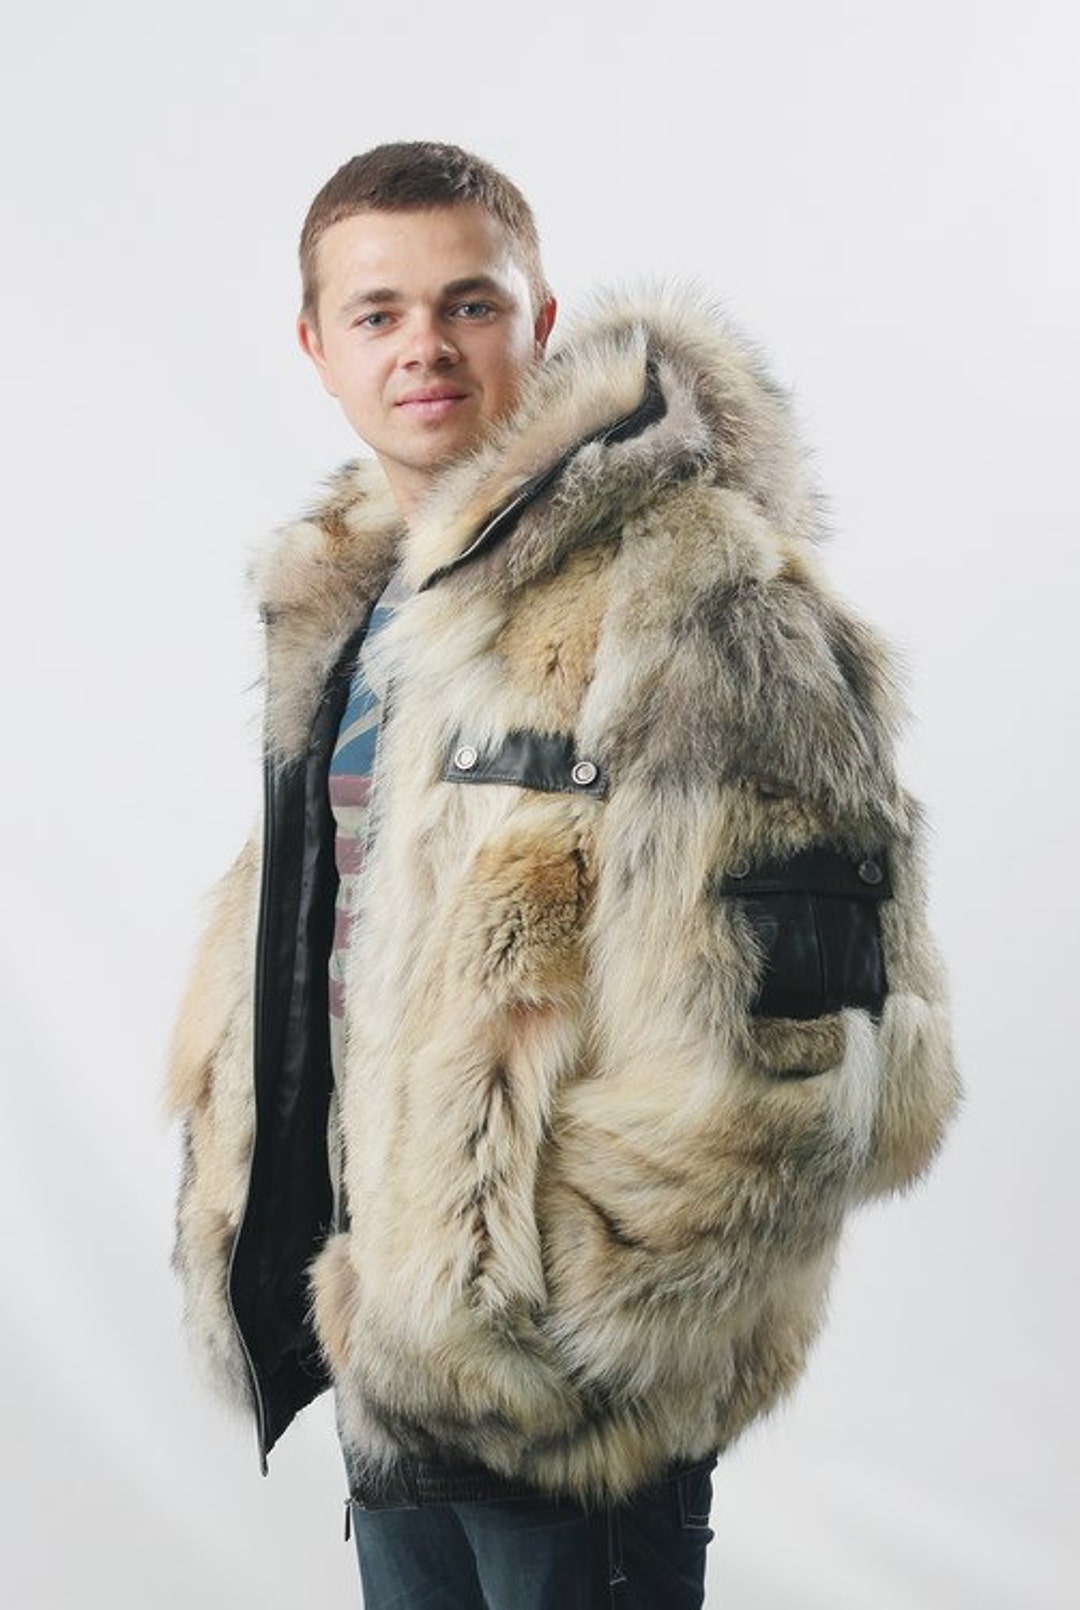 Coyote Fur Coat for Men Mens Winter Jacket Bomber Hooded photo